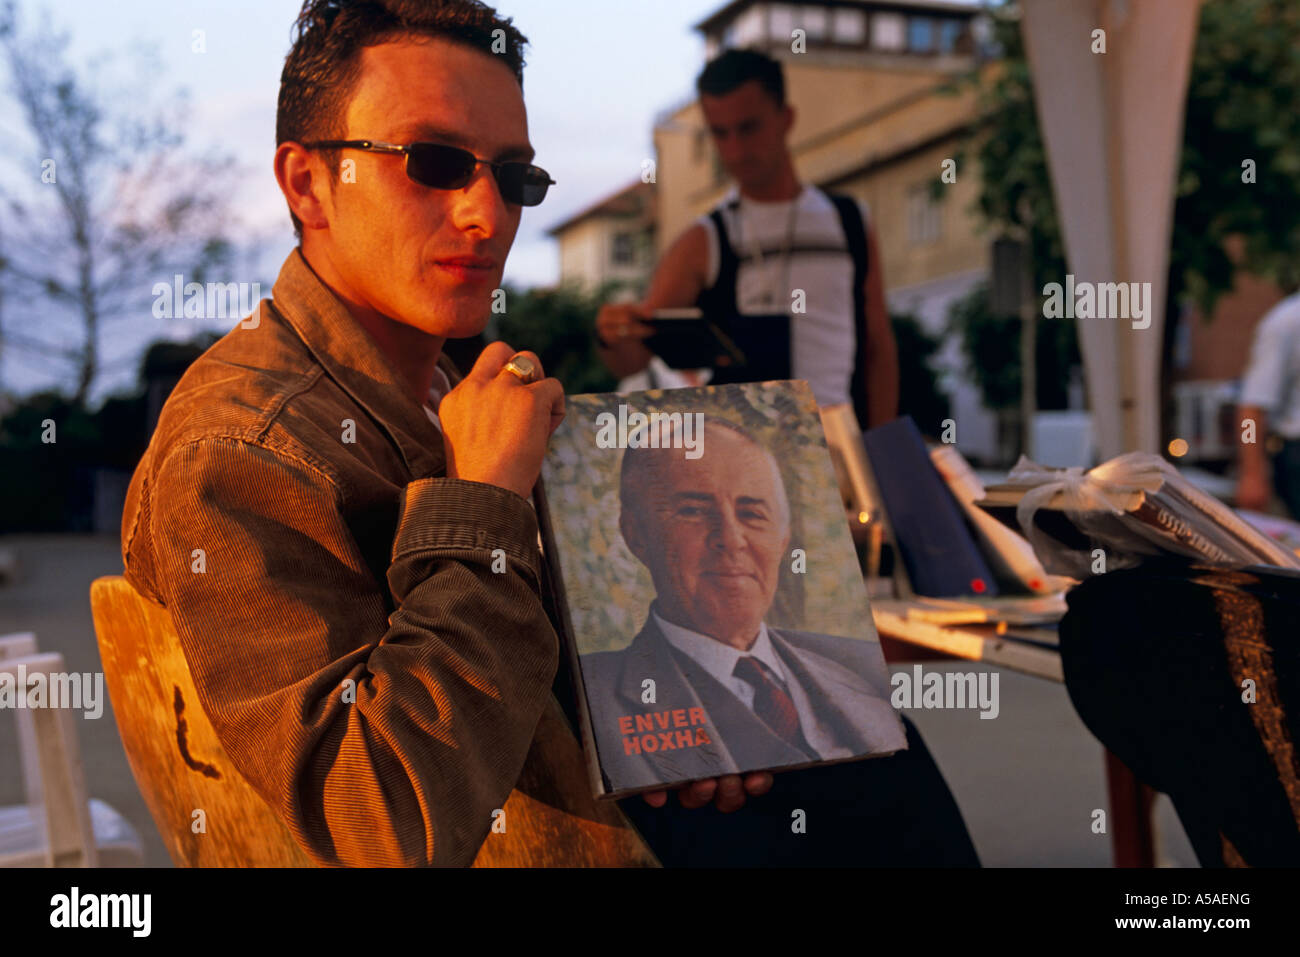 A man holding a Enver Hoxha book in Kosovo Serbia and Montenegro Stock Photo